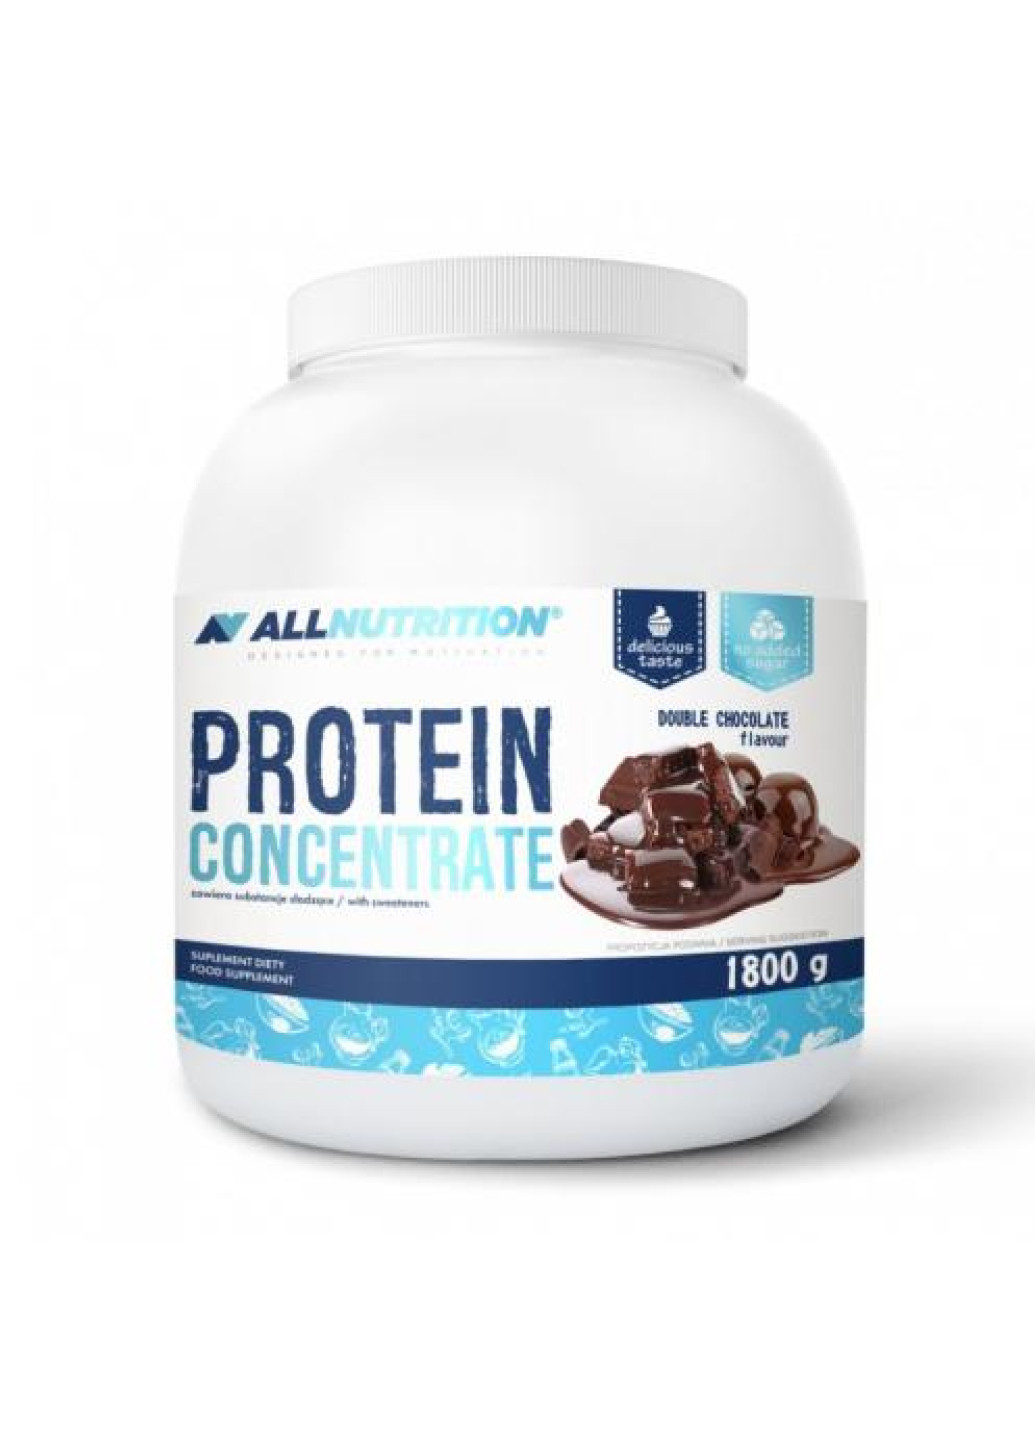 Сывороточный концентрат протеина Protein Concentrate – 1800g Peanut Butter Allnutrition (254805201)